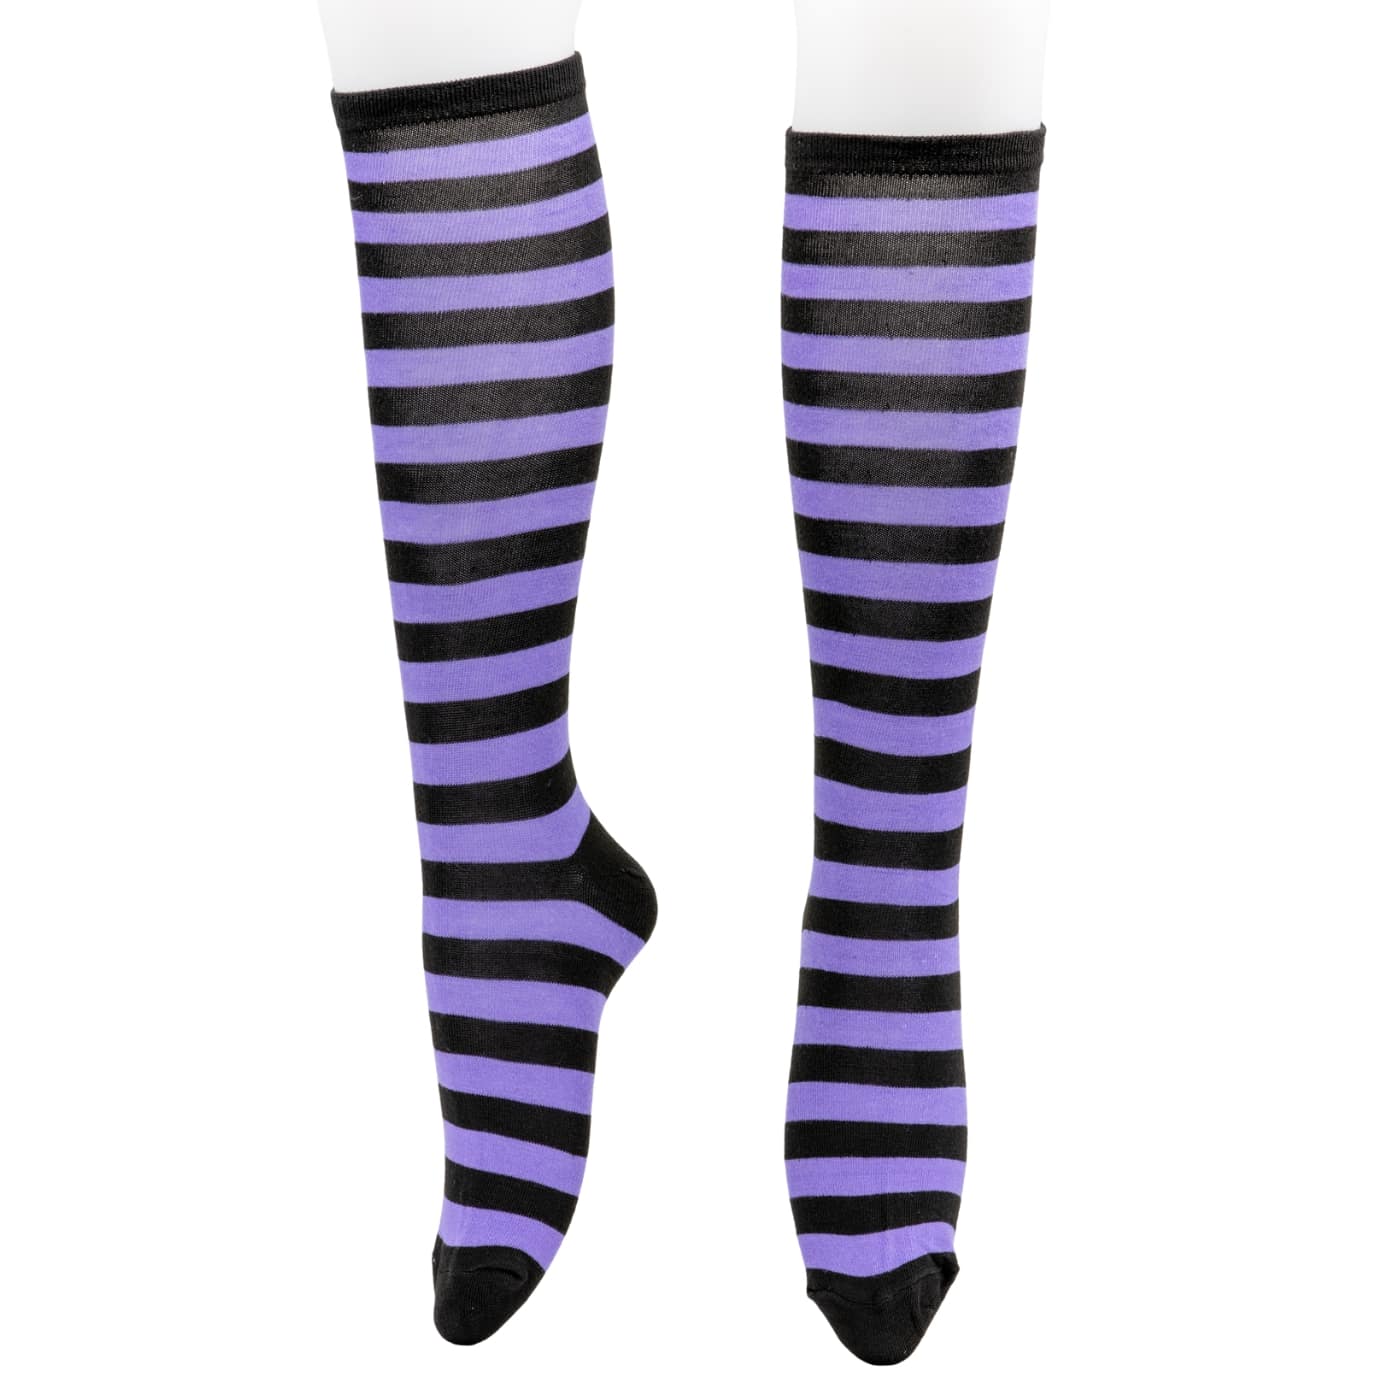 Black & Lilac Stripe Knee High Socks by RainbowsAndFairies.com.au (Stripe Long Socks - Rainbow - Stockings - Colourful Socks - Vintage Inspired) - SKU: FW_SOCKS_STRIPE_B&L - Pic-01